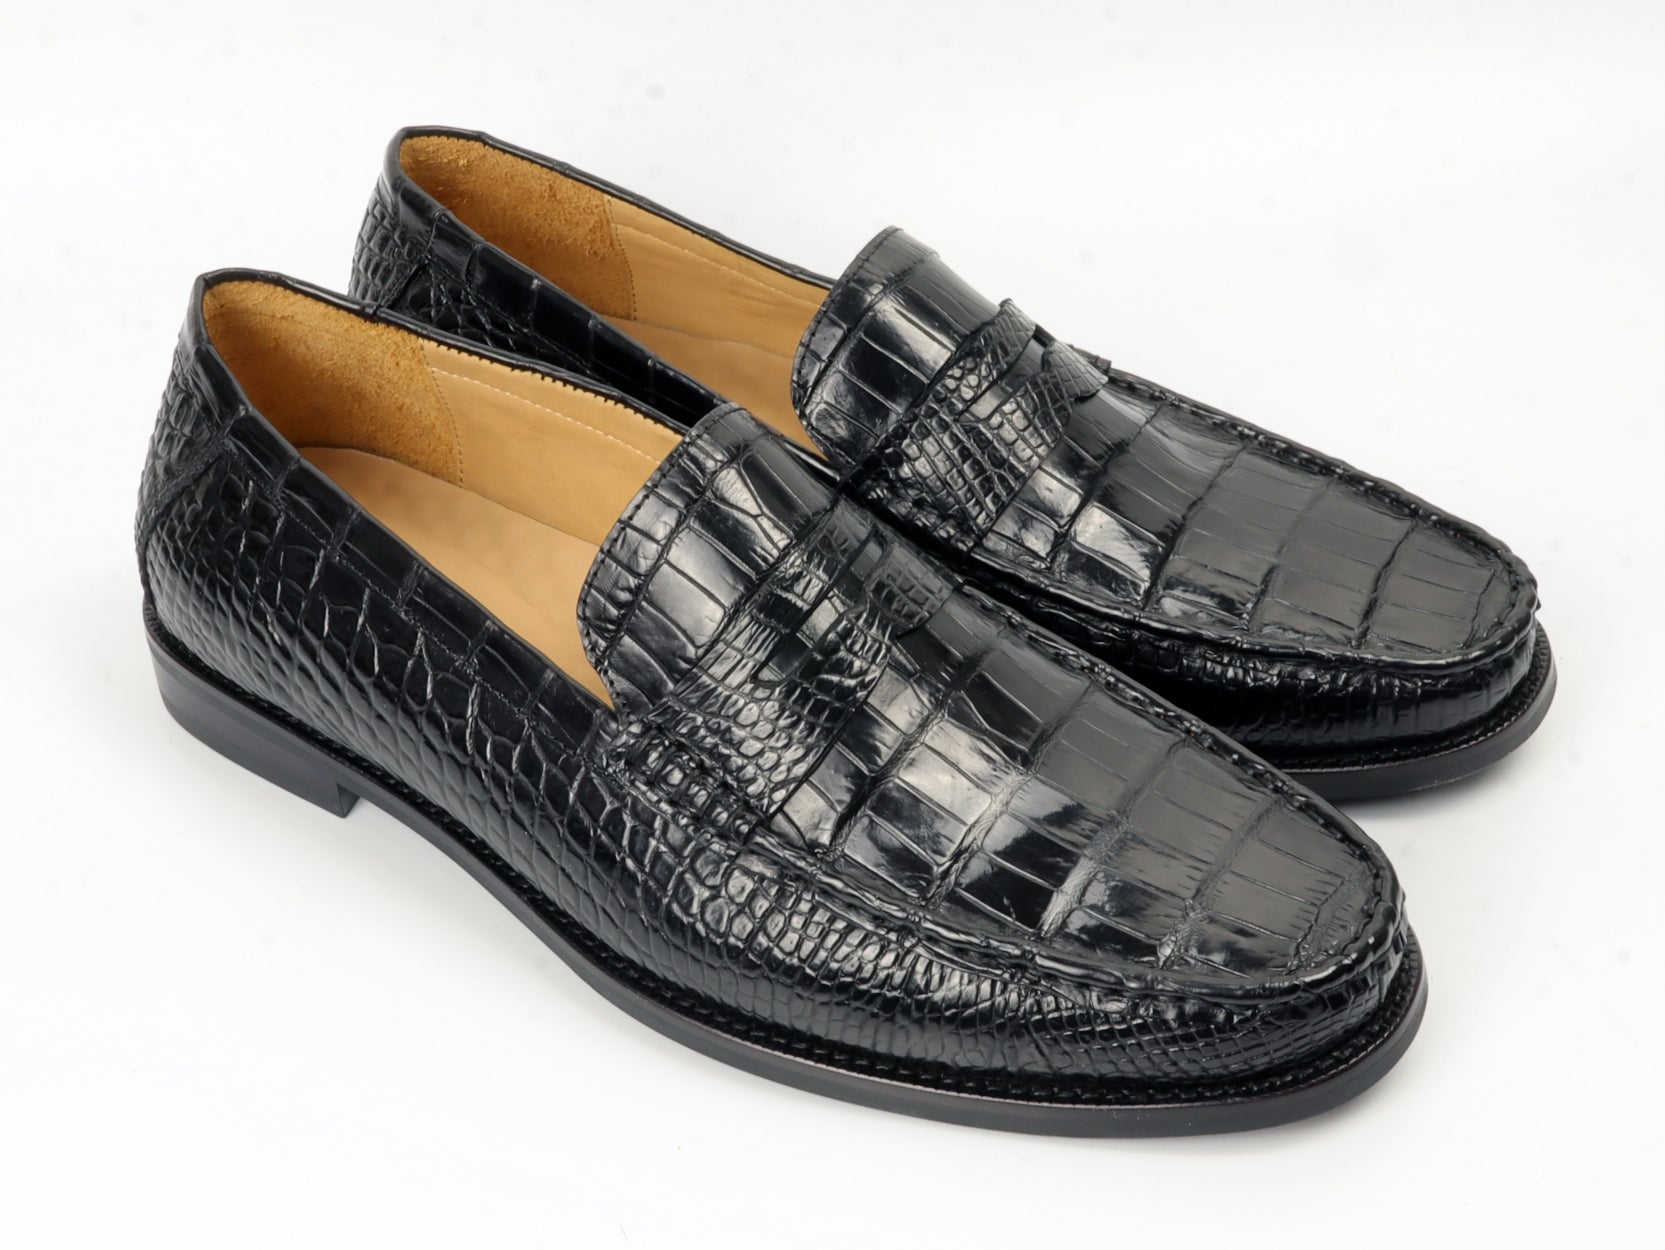 Authentic Real True Crocodile Skin Black Brown Men's Casual Walking Shoes Exotic Genuine Alligator